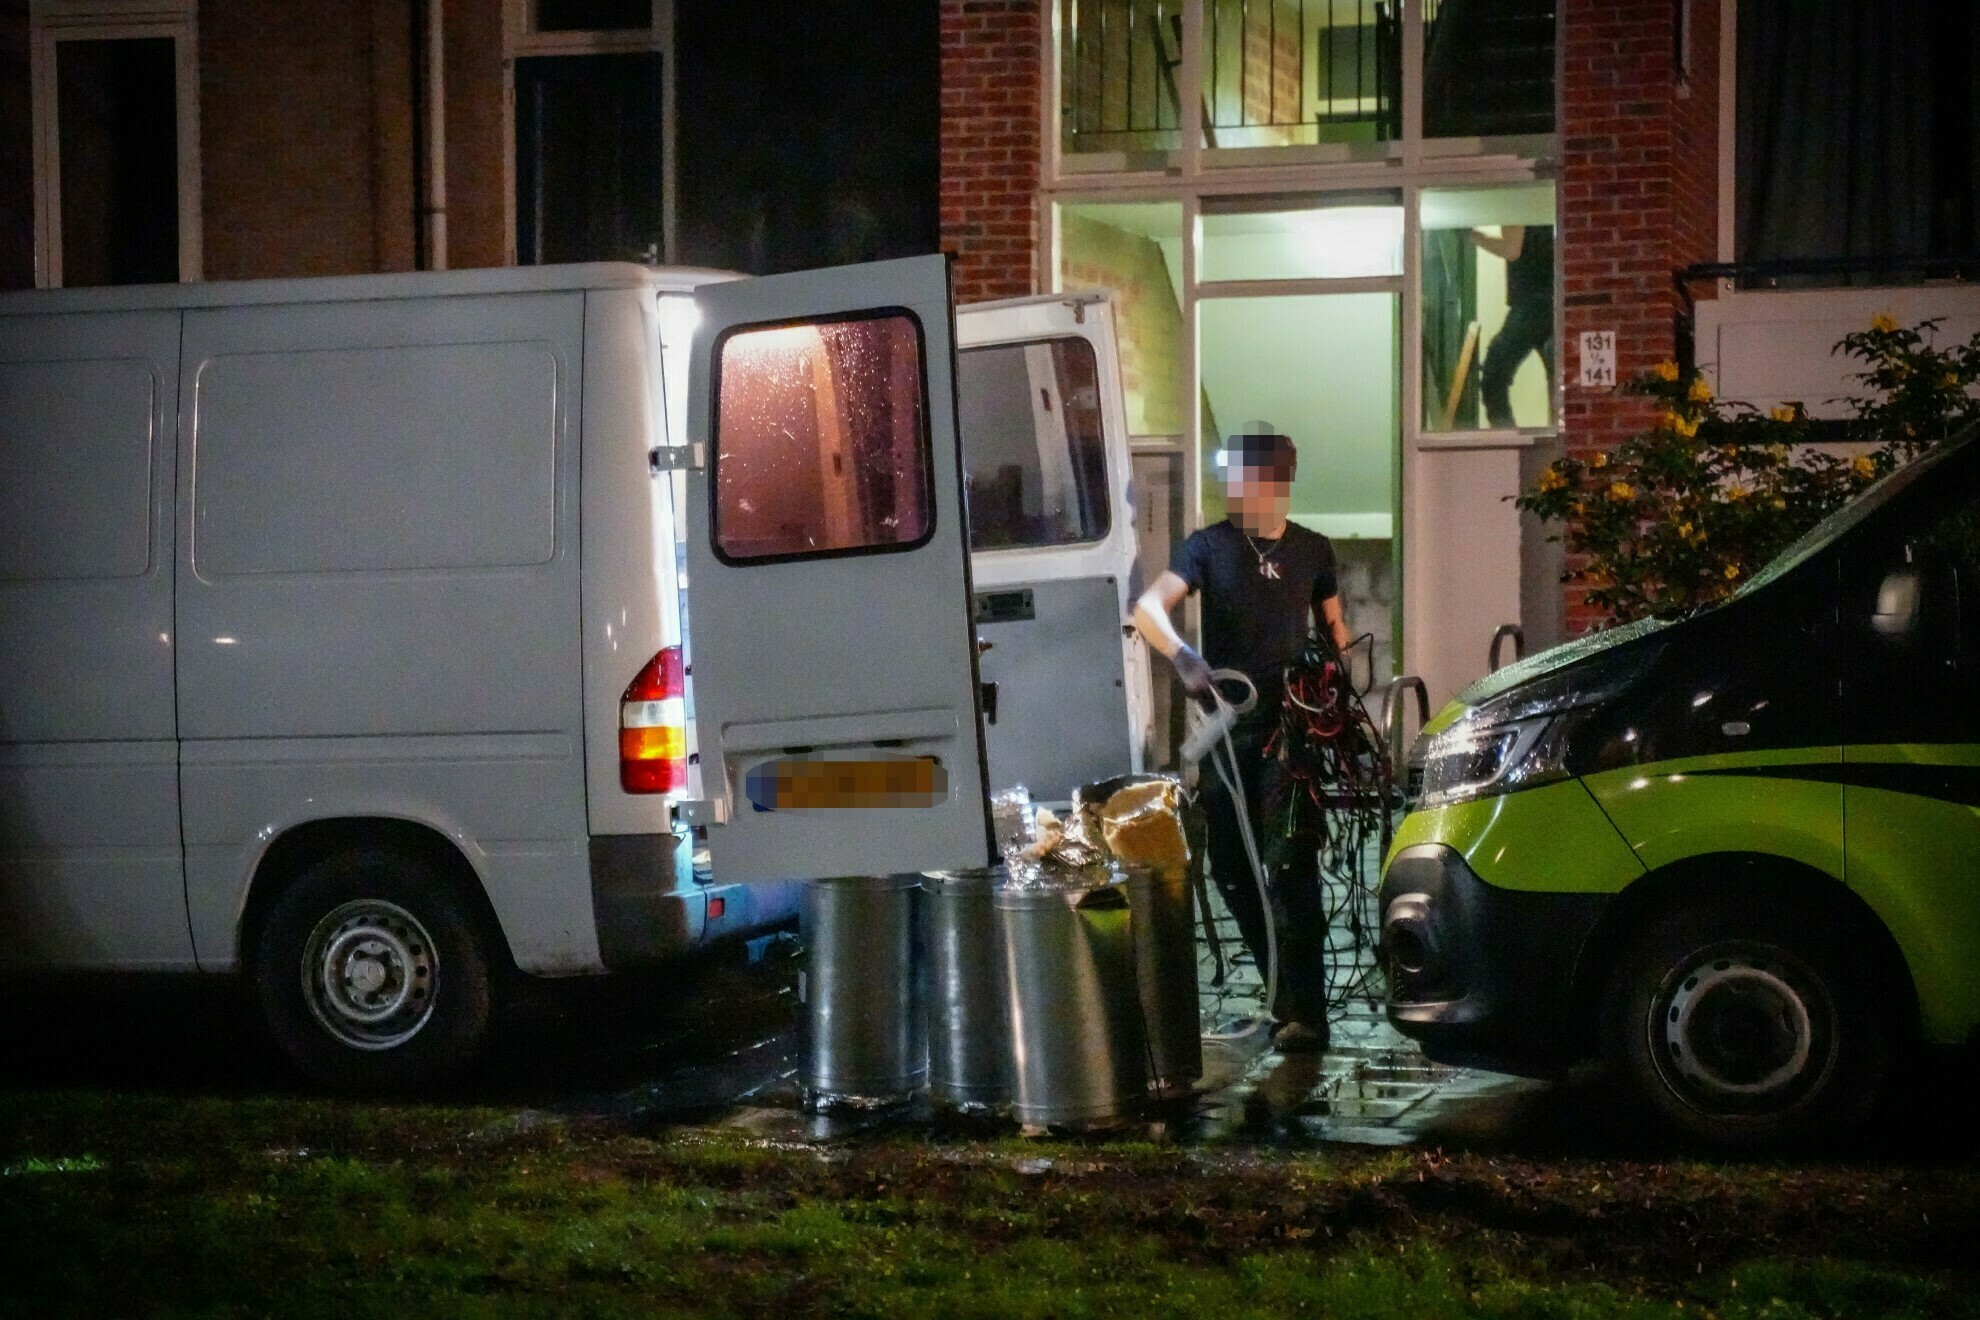 Politie rolt hennepkwekerij op in portiekflat na melding wateroverlast